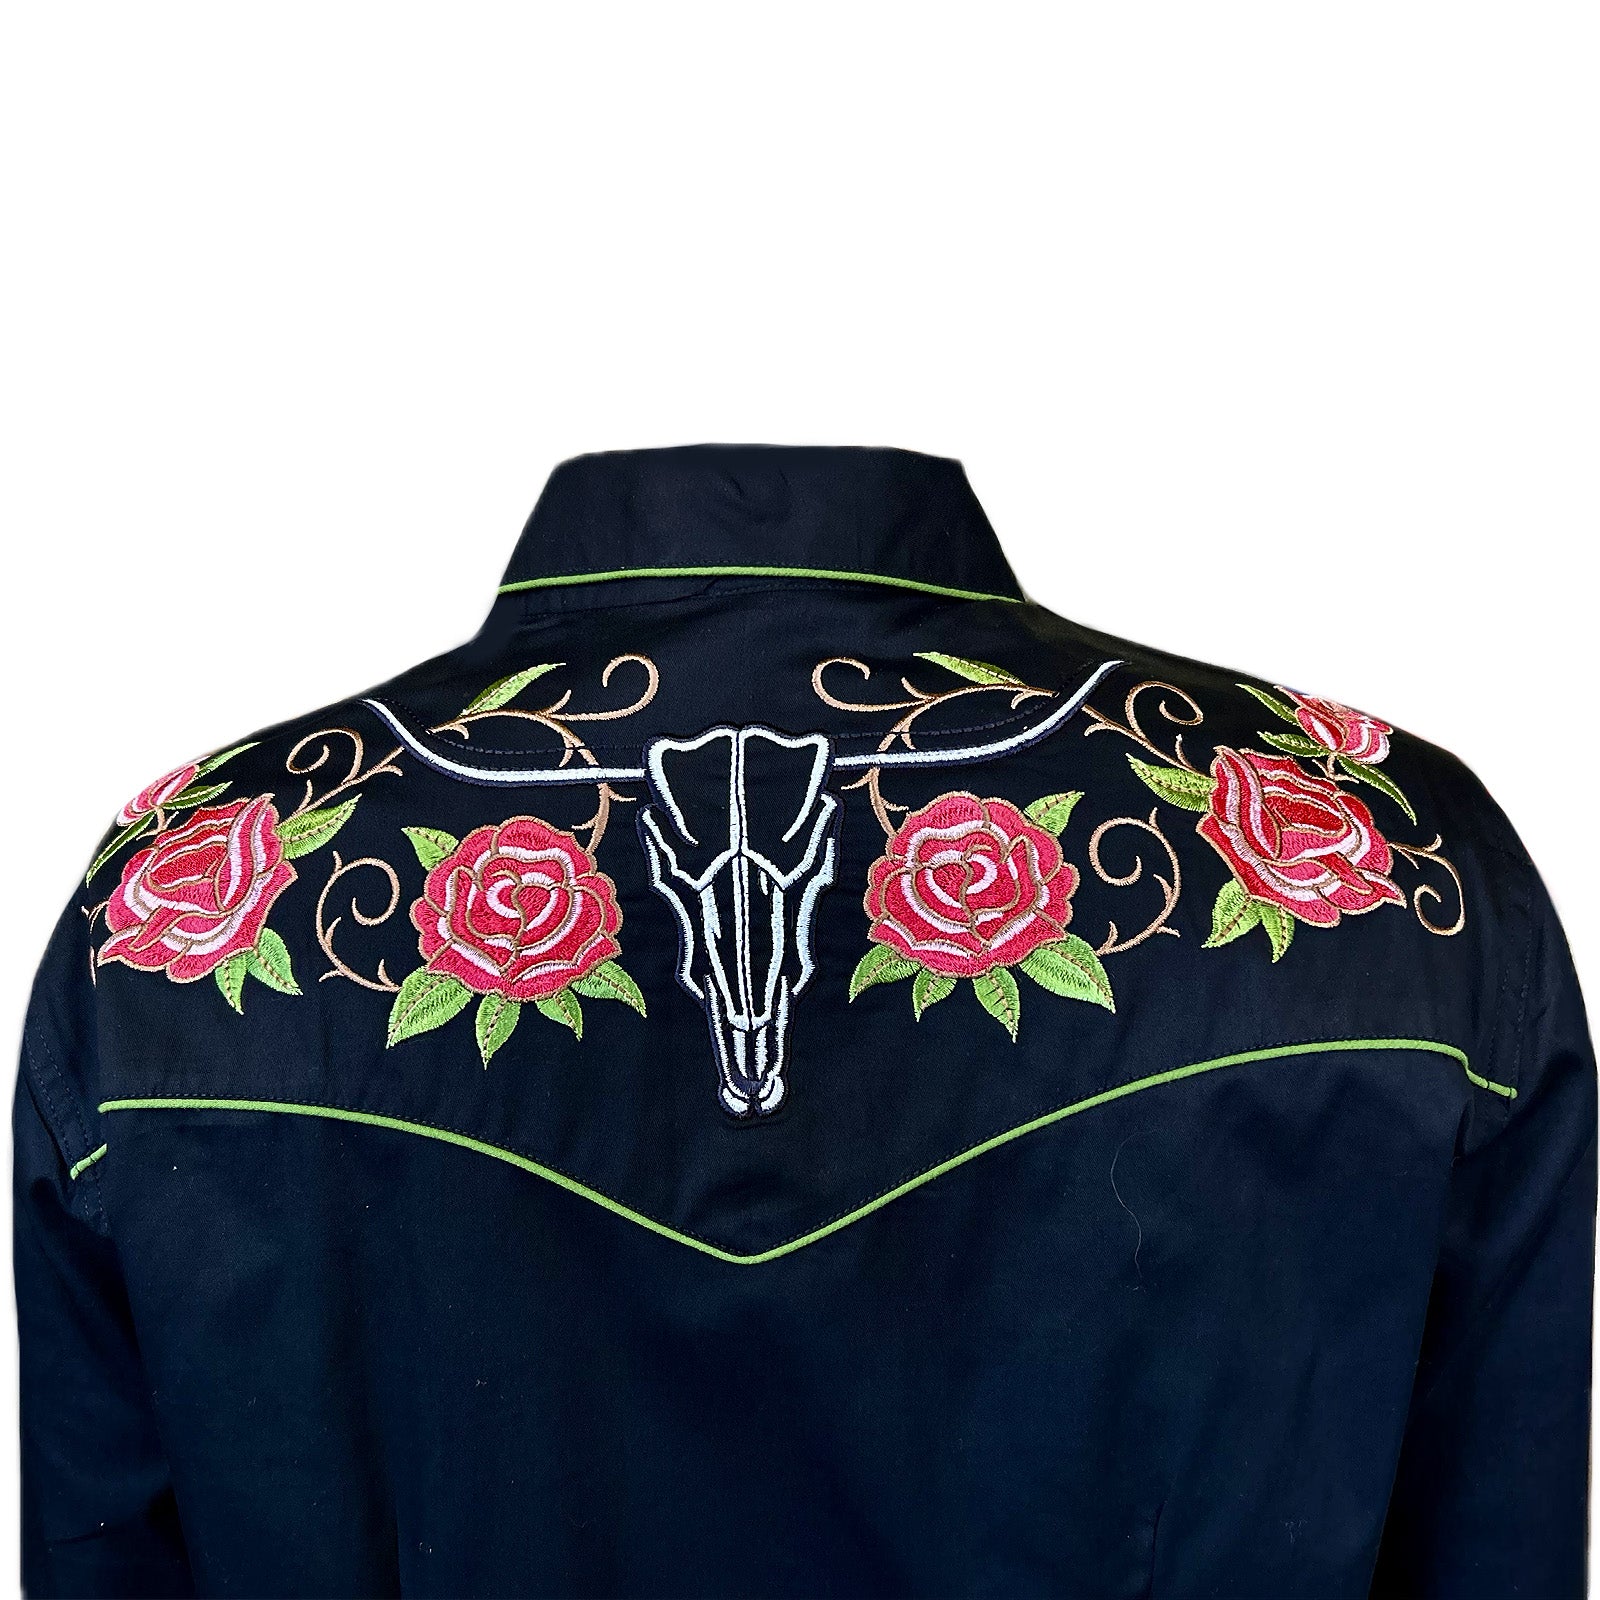 Women's Steer Longhorn & Floral Embroidery Western Shirt in Black